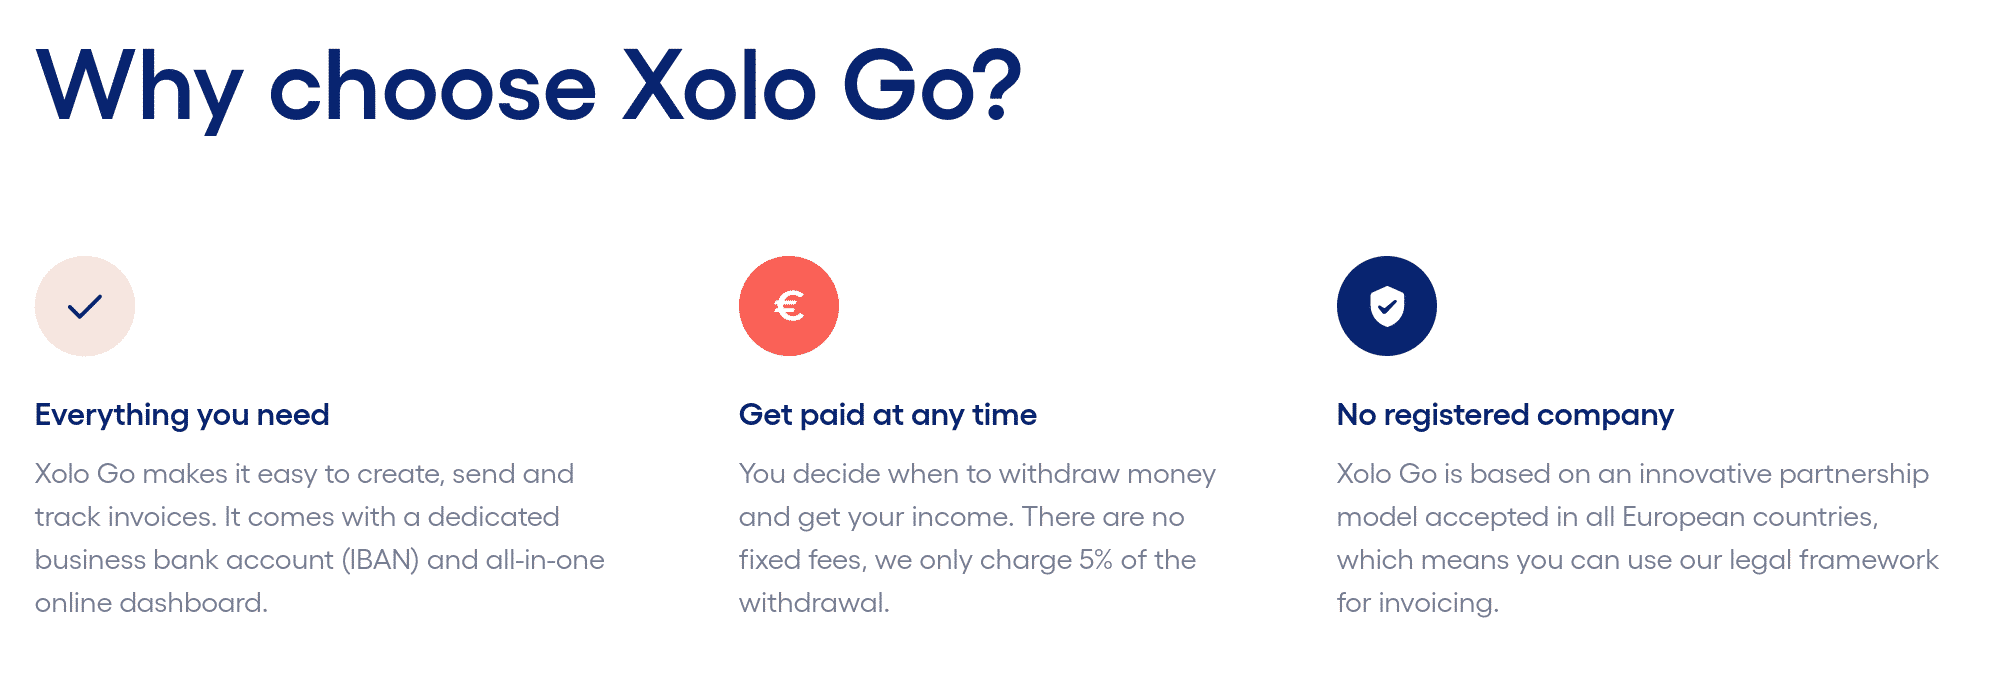 Xolo Go Review - Reasons